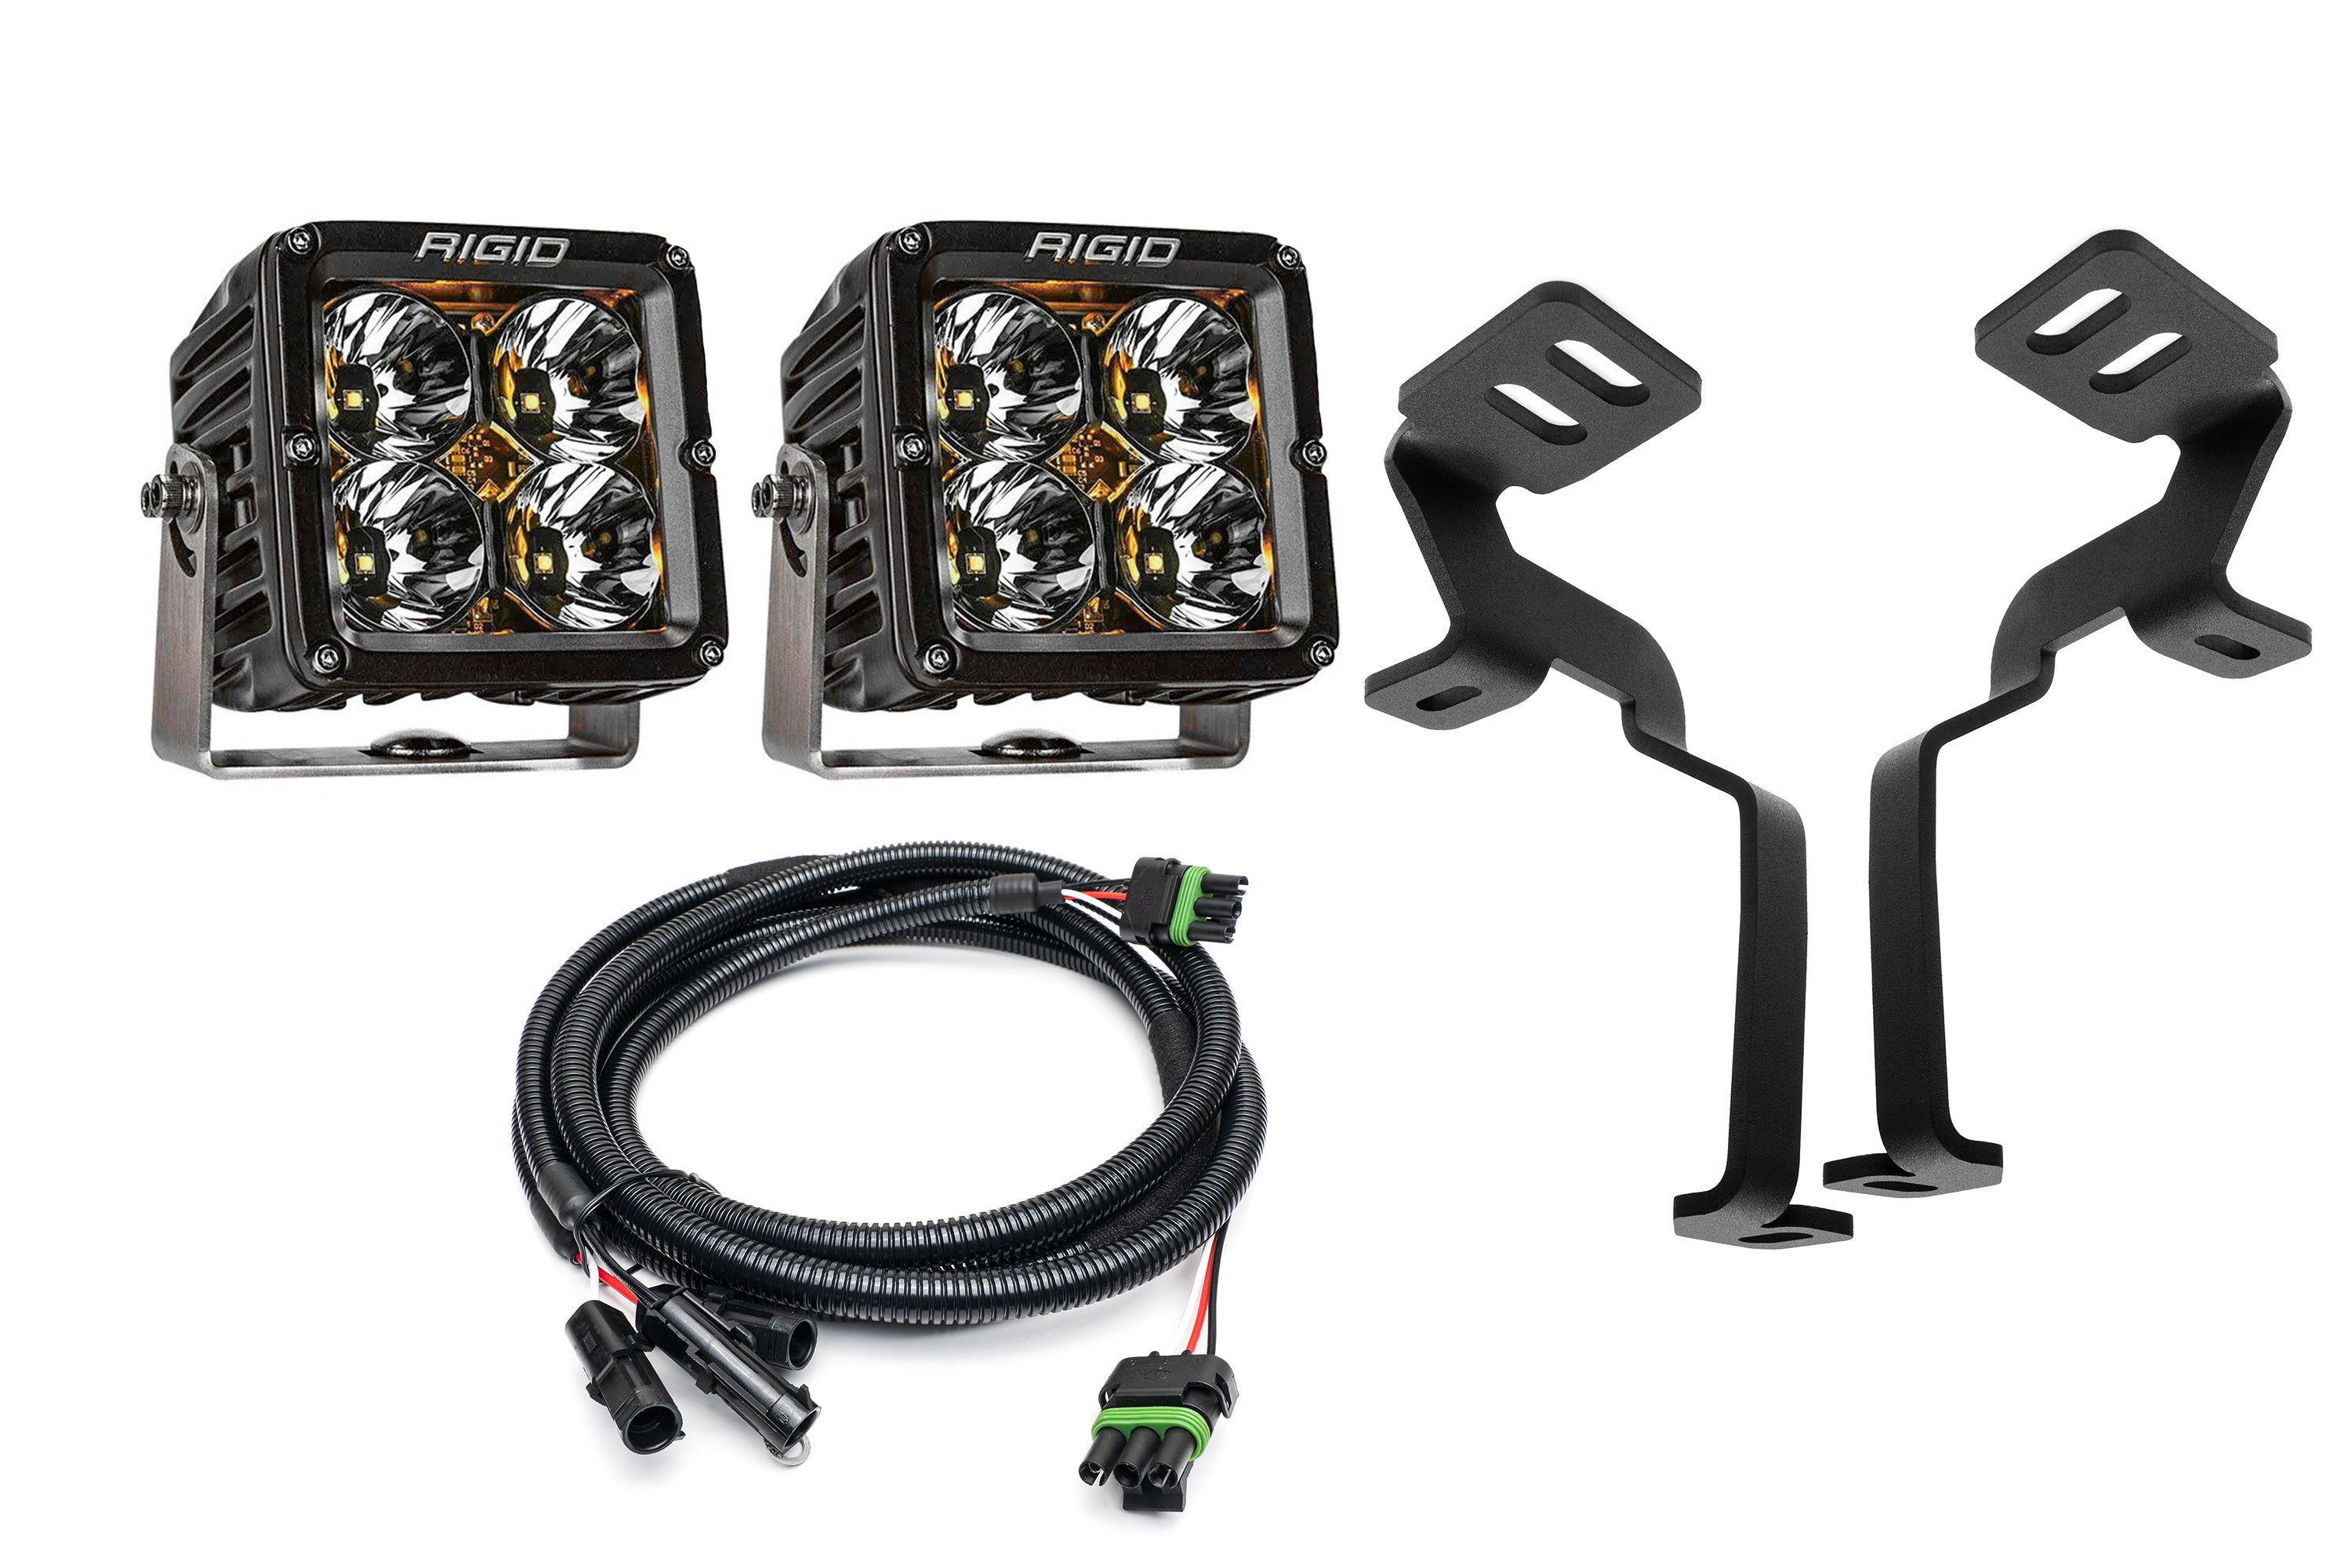 SPV Parts Rigid XL Series Radiance & Pro - SPV Parts A - Pillar (Ditch) Light Kit for Ford 2021+ Raptor/Tremor, F-150